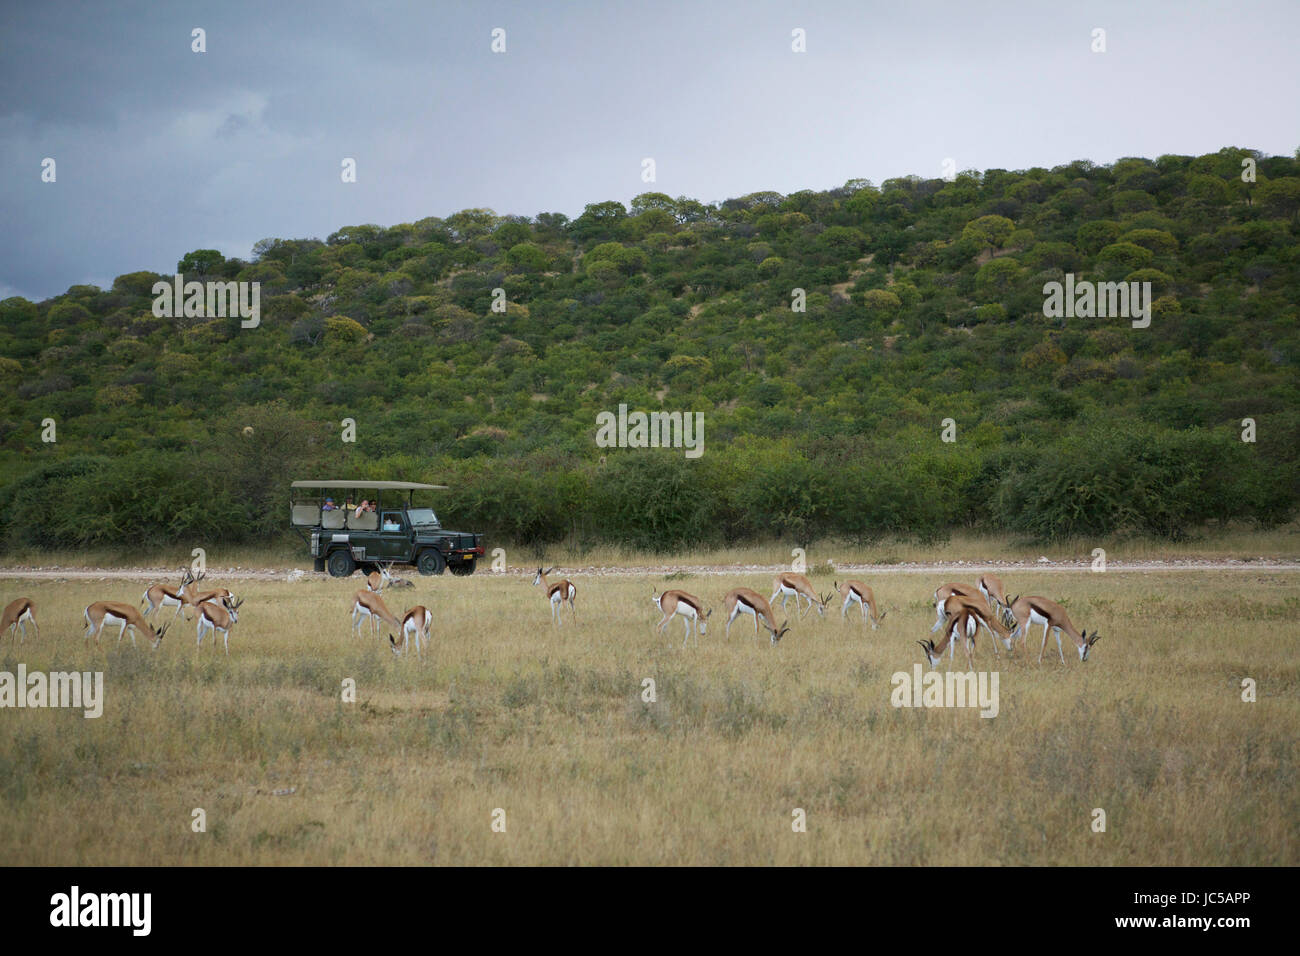 Antelope in field during Africa safari Stock Photo